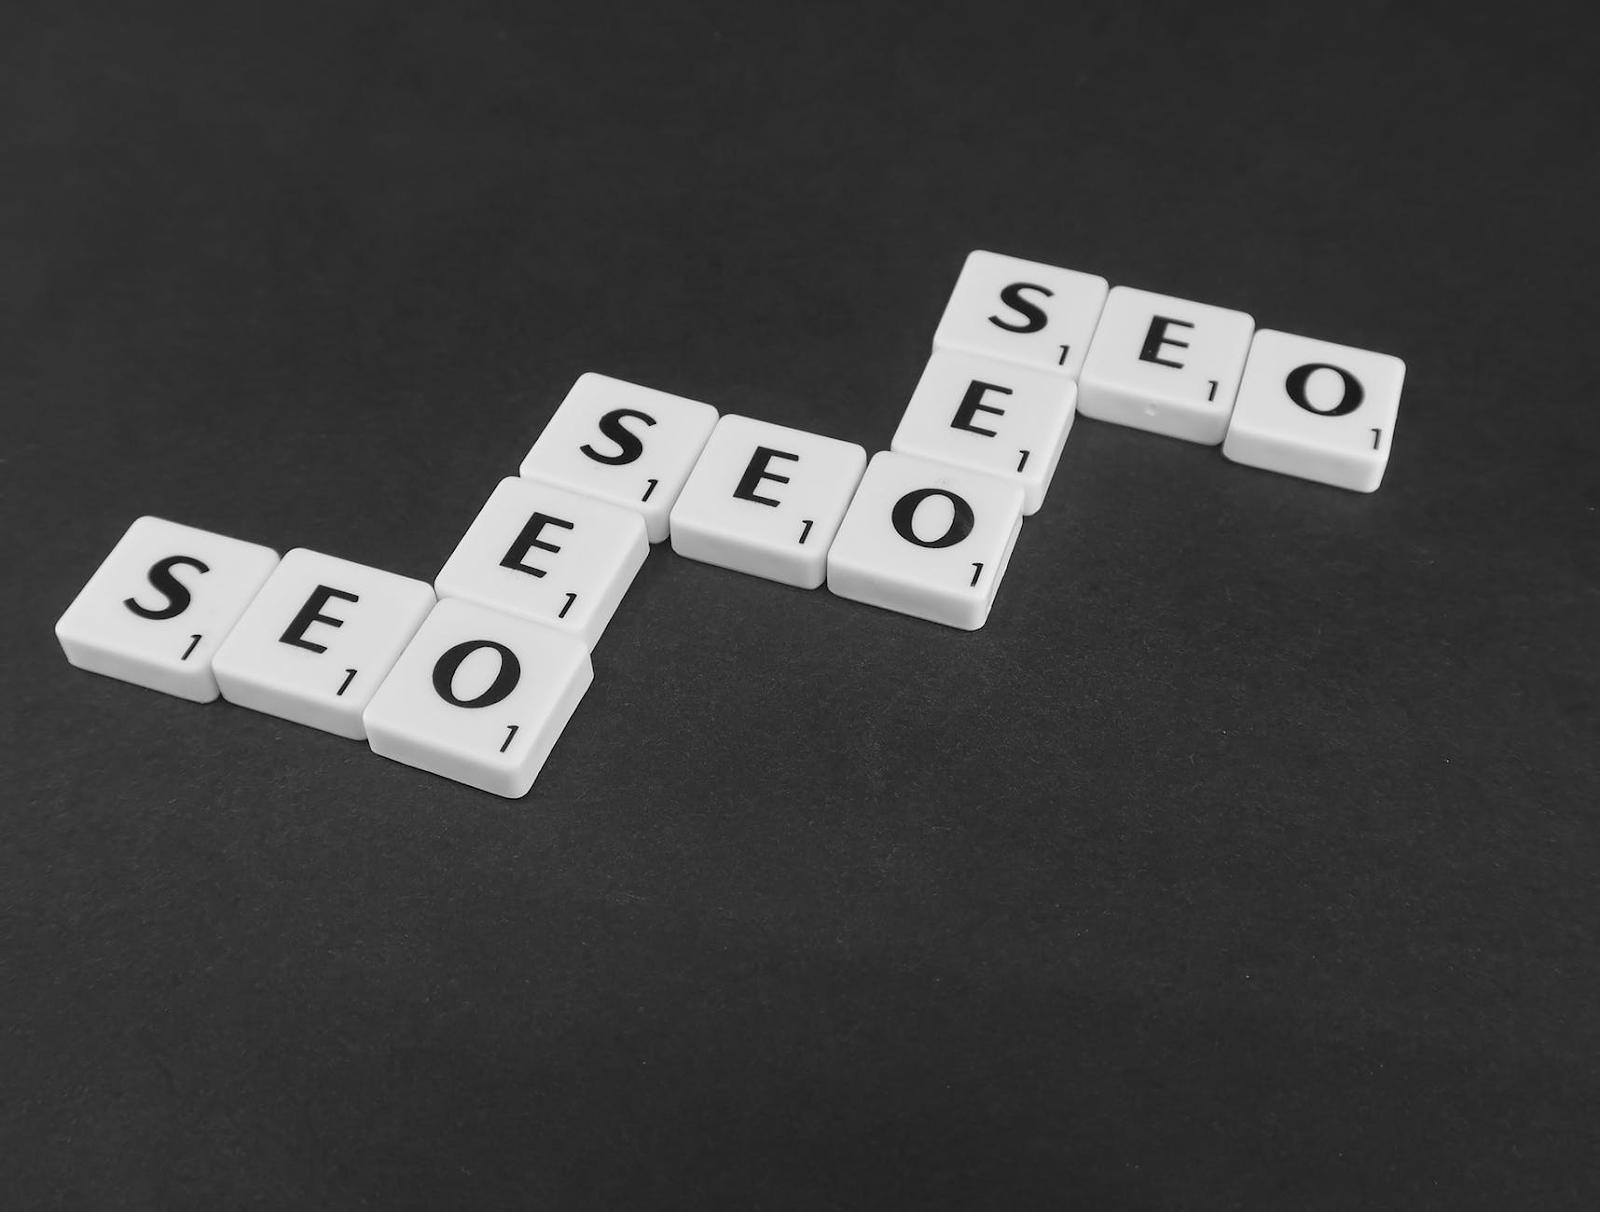 search engine optimization, Digital marketing strategies